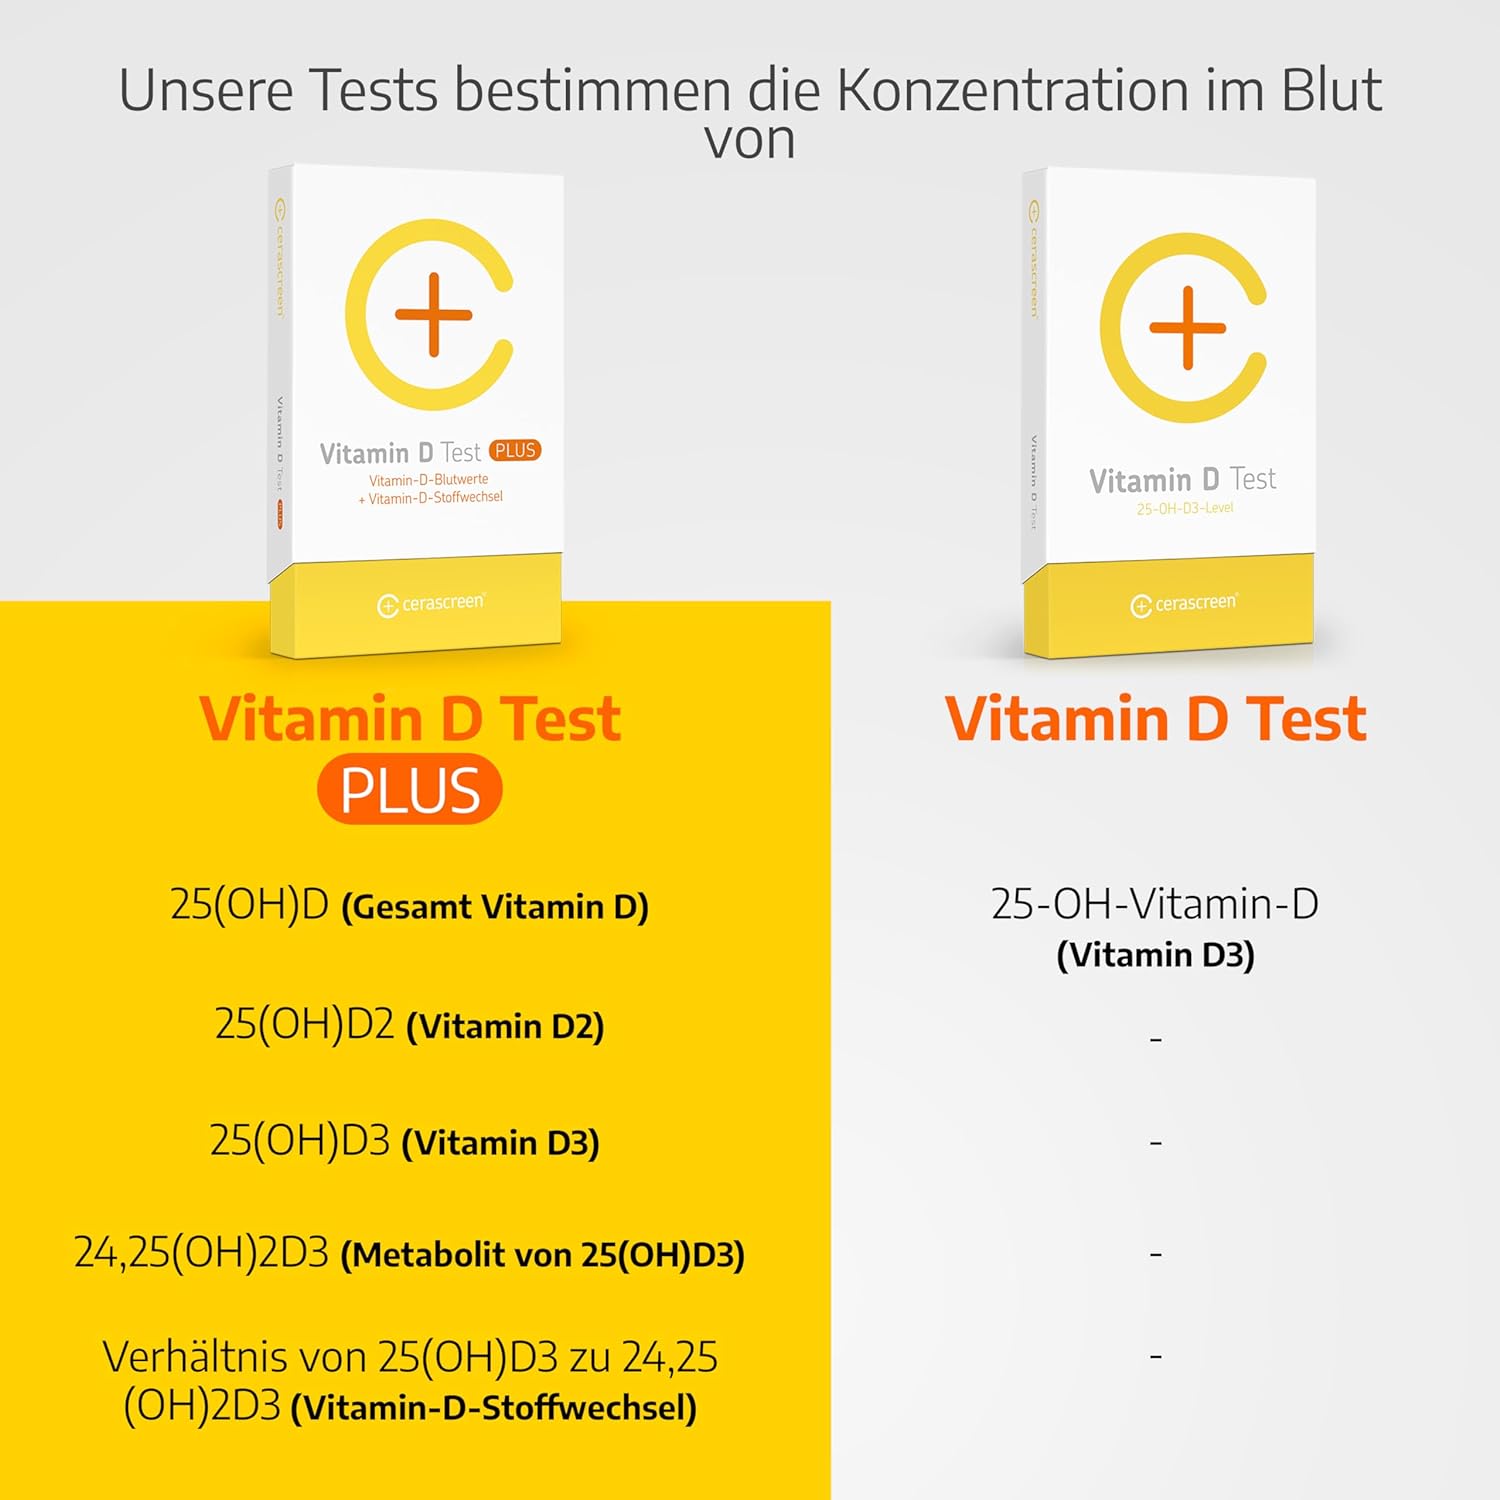 cerascreen® Vitamin D Test  PLUS